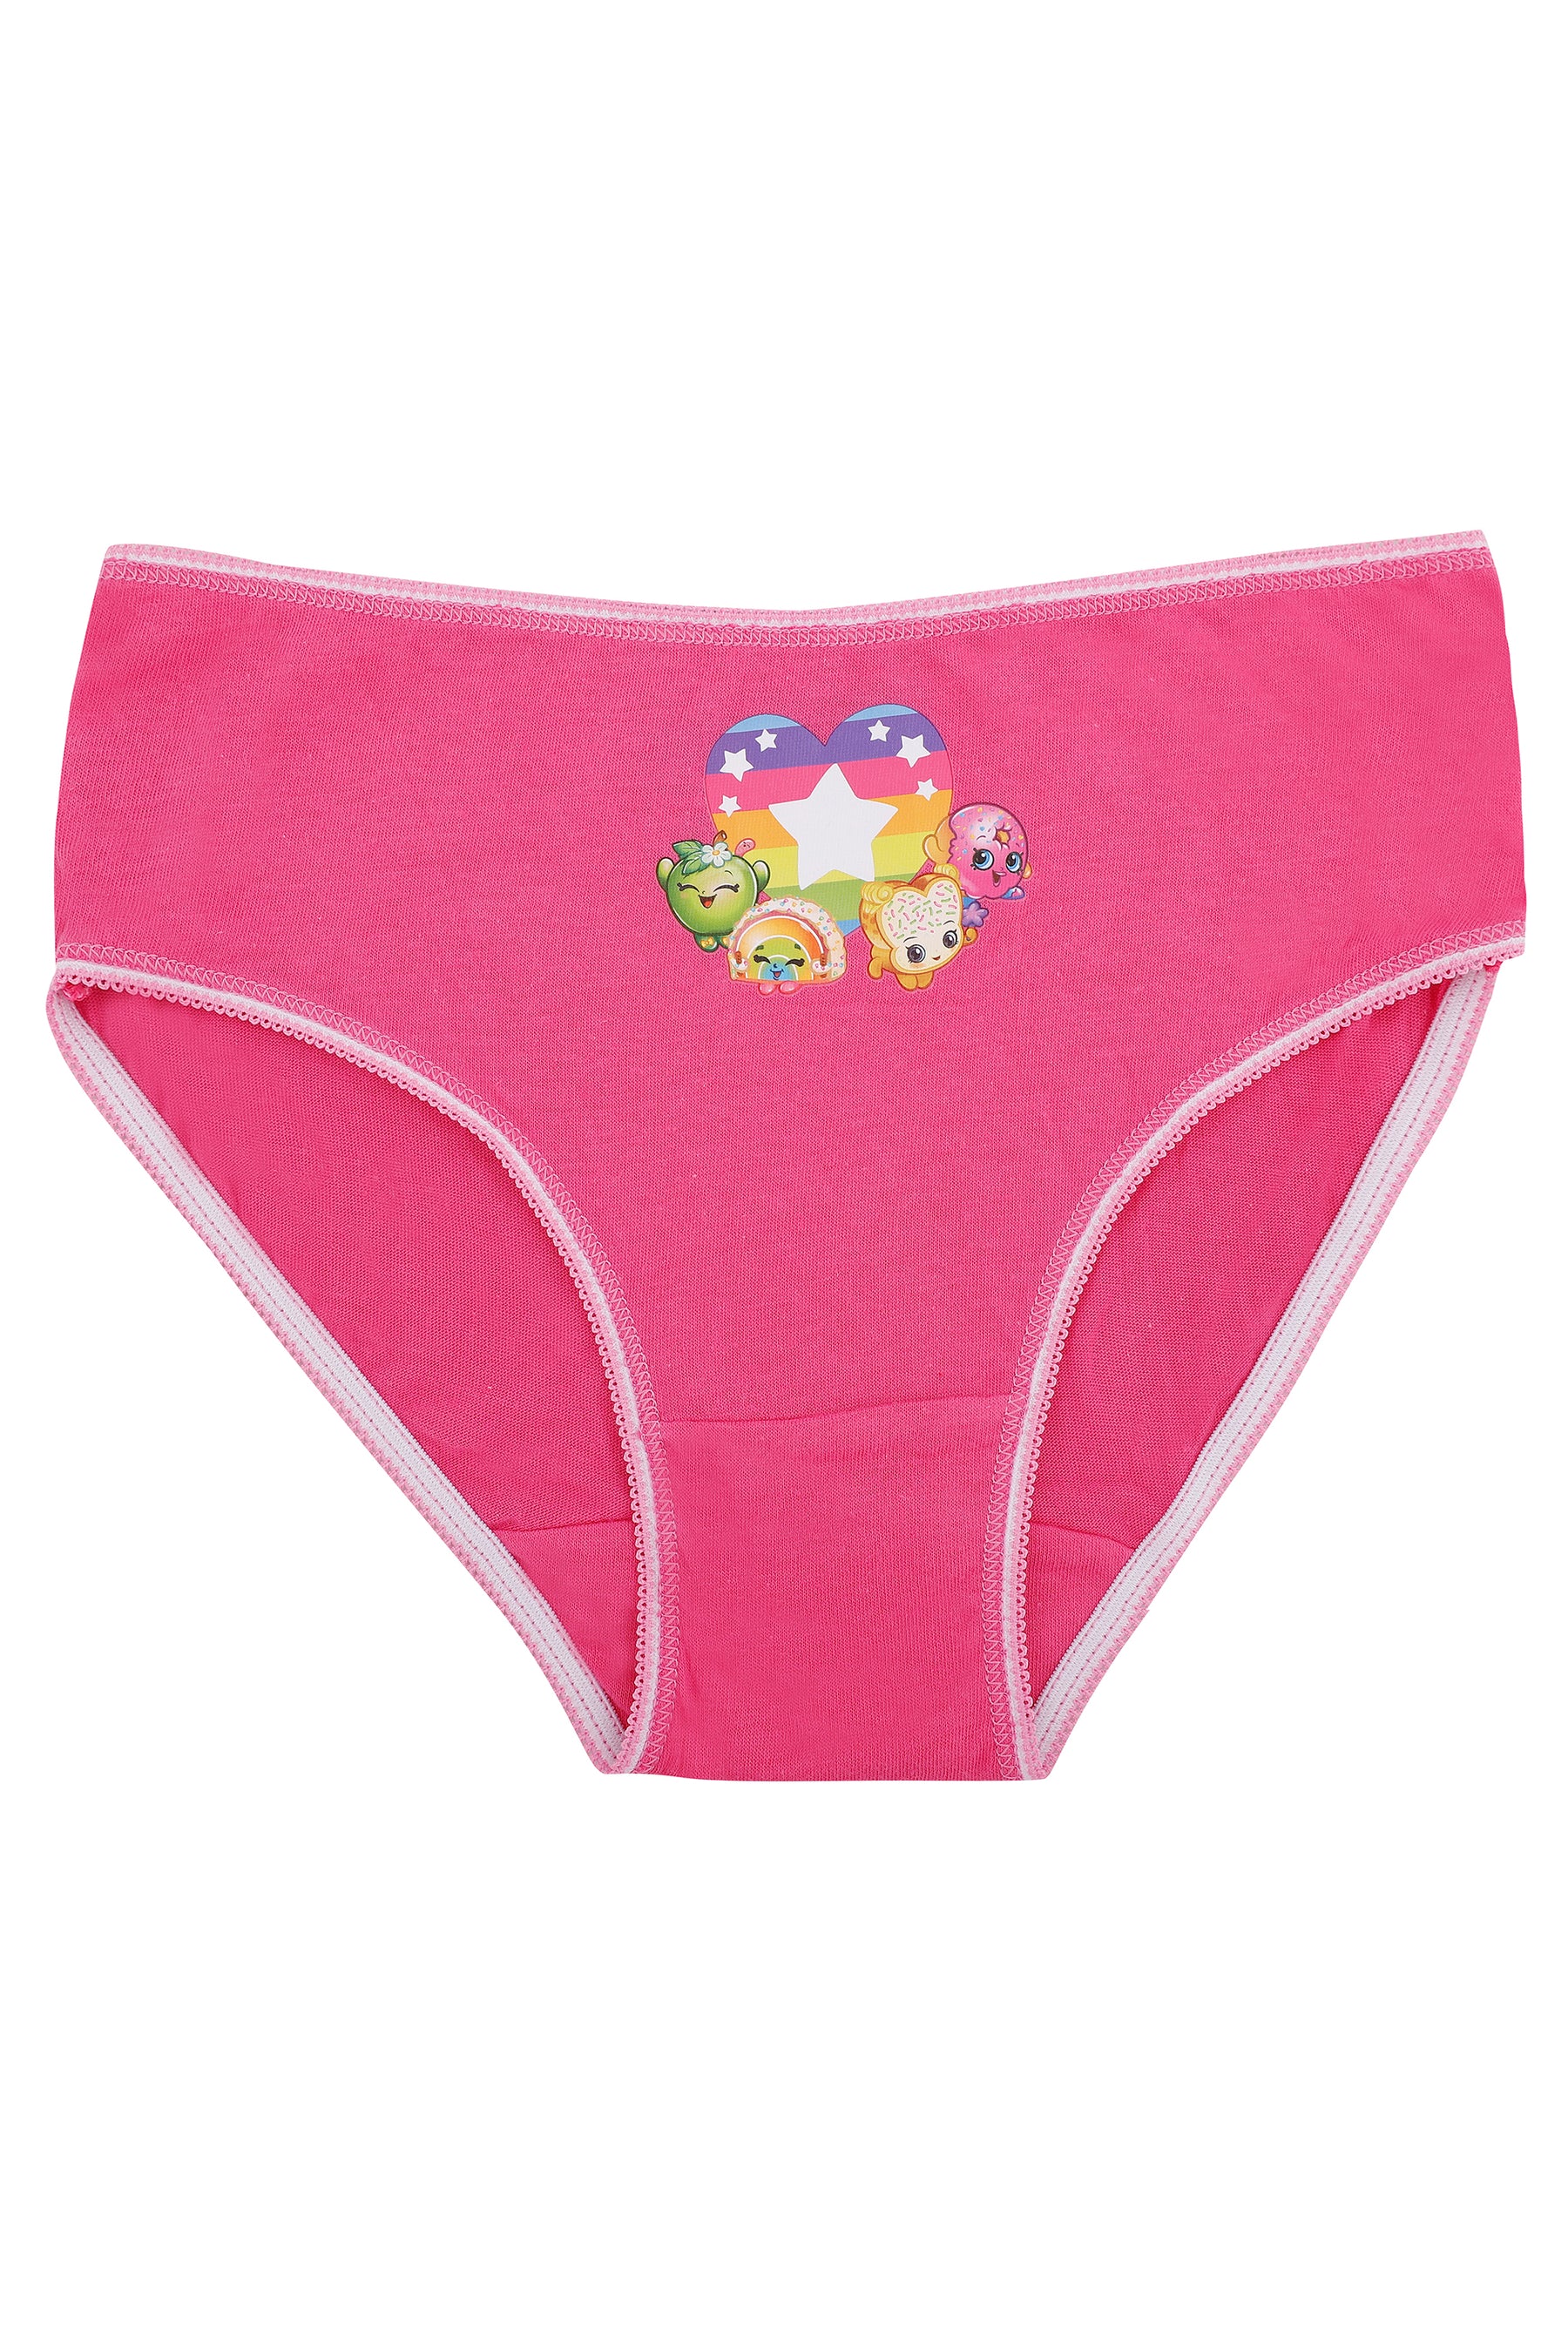 Shopkins Little Girls' Stars 3 Pack Underwear Briefs Set, Multi, 6 :  : Clothing, Shoes & Accessories